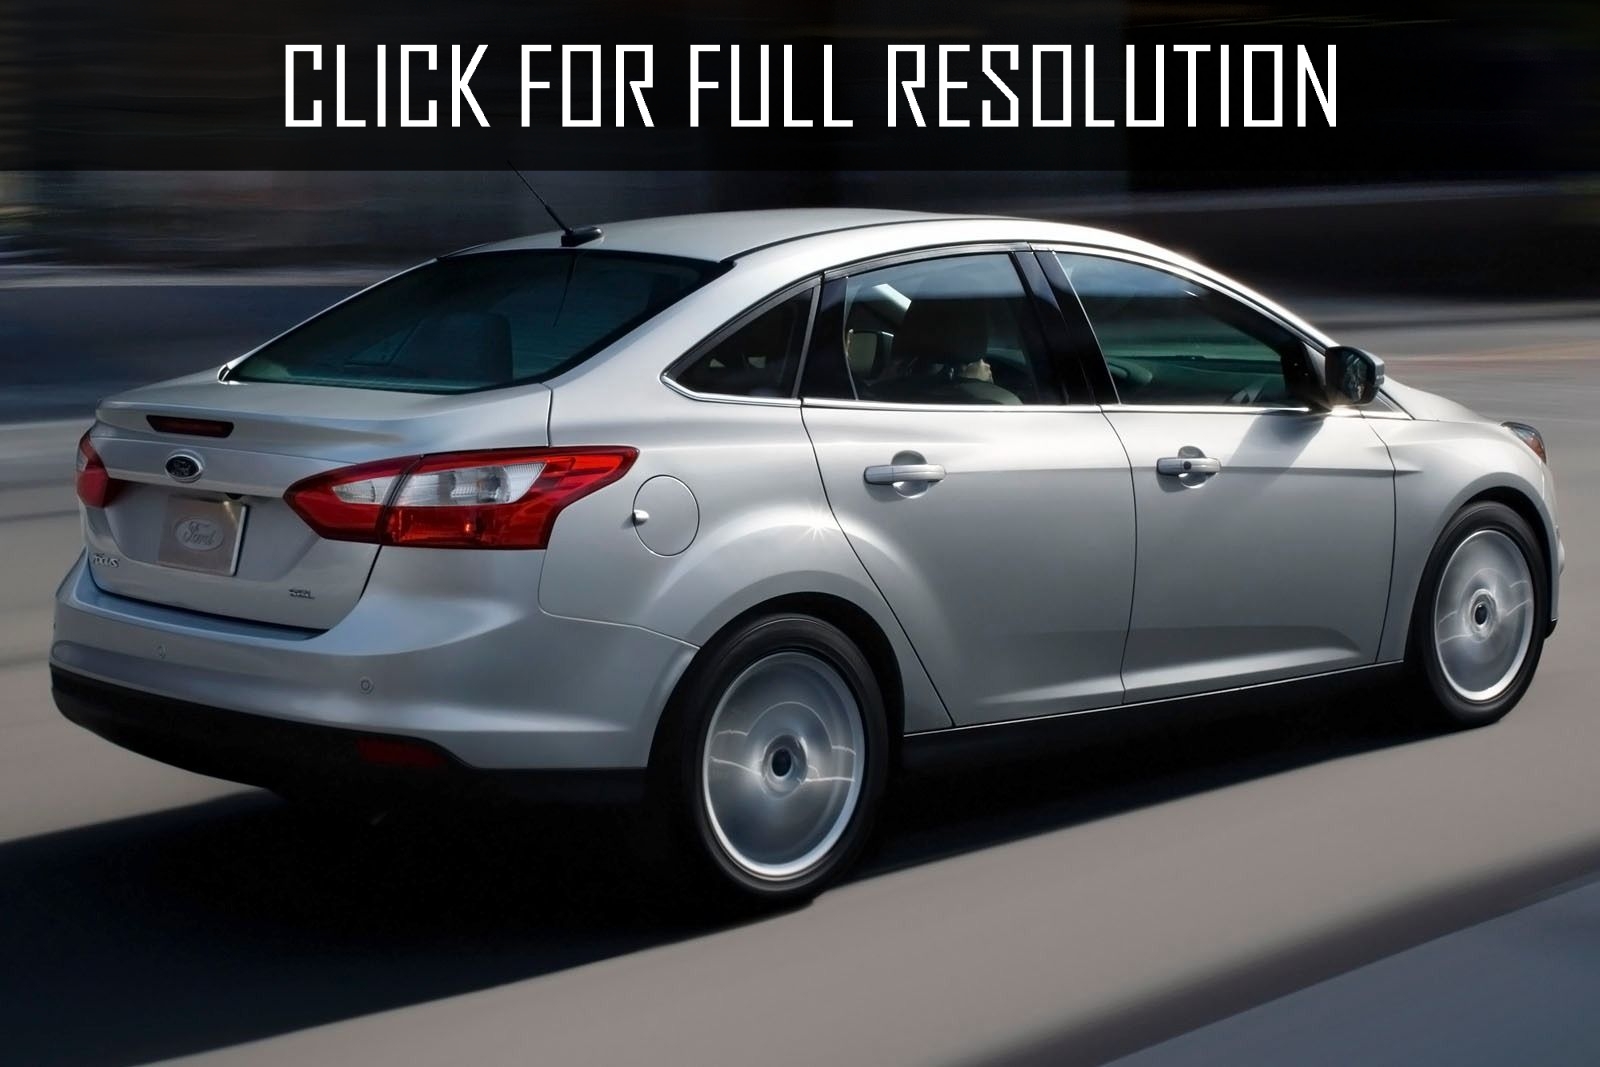 2014 Ford Focus Sedan news, reviews, msrp, ratings with